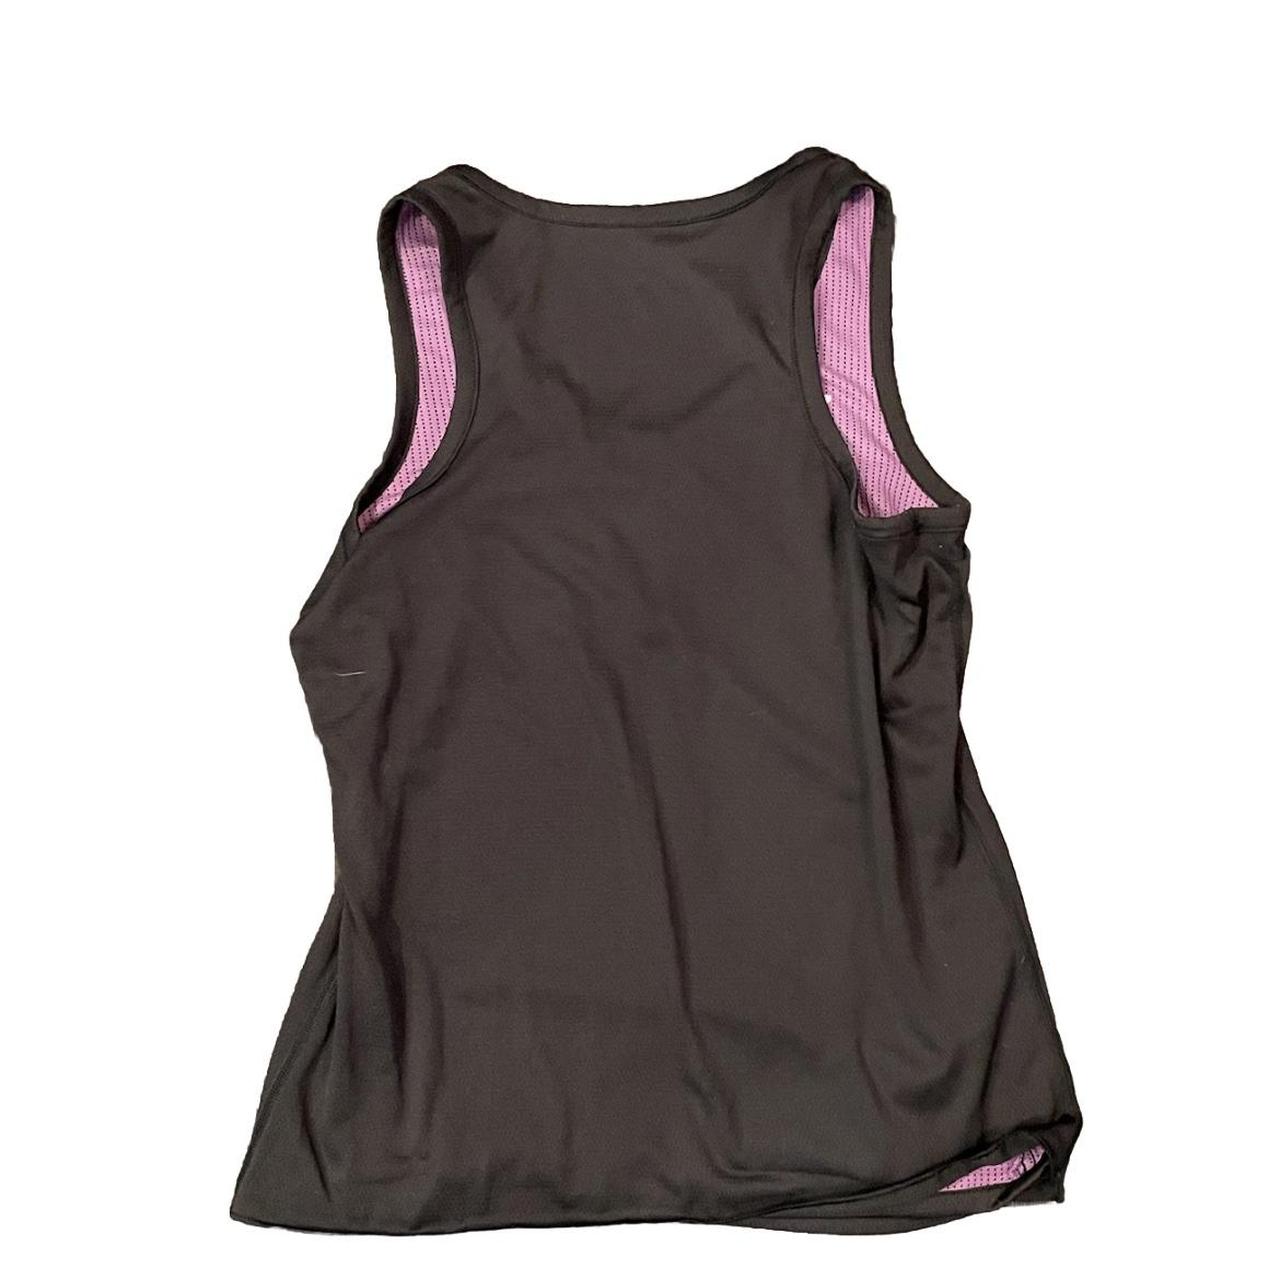 New Balance Women's Purple and Black Vest (3)